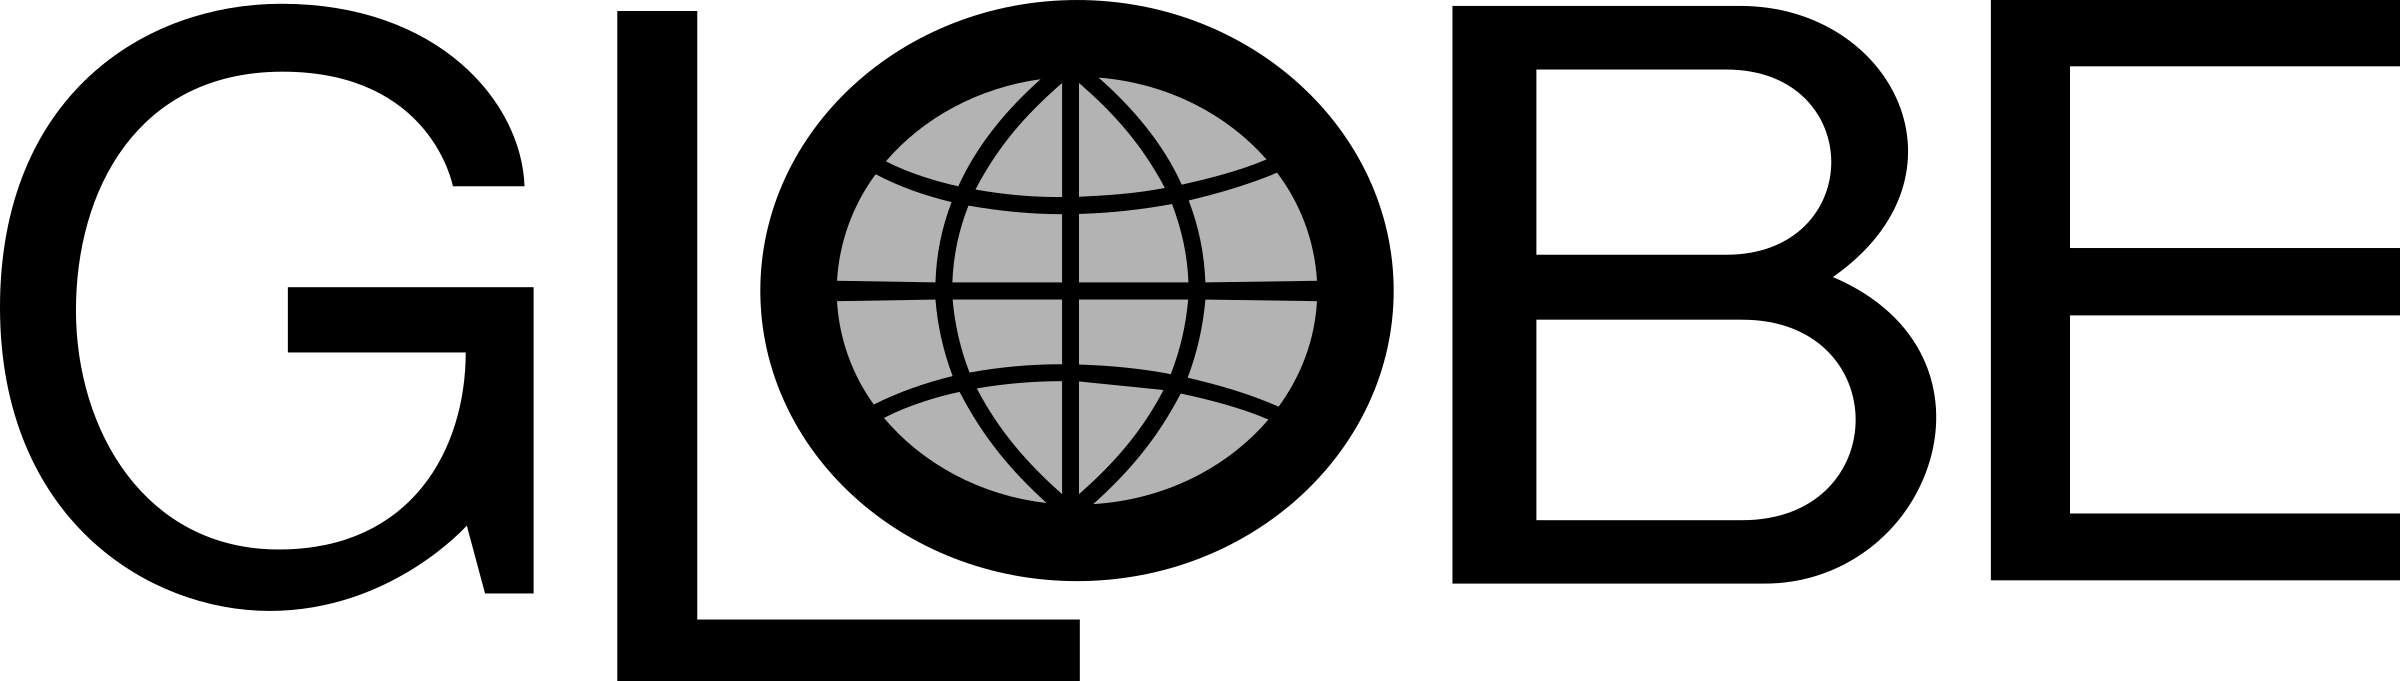 White Globe Logo - Globe Logo PNG Transparent & SVG Vector - Freebie Supply